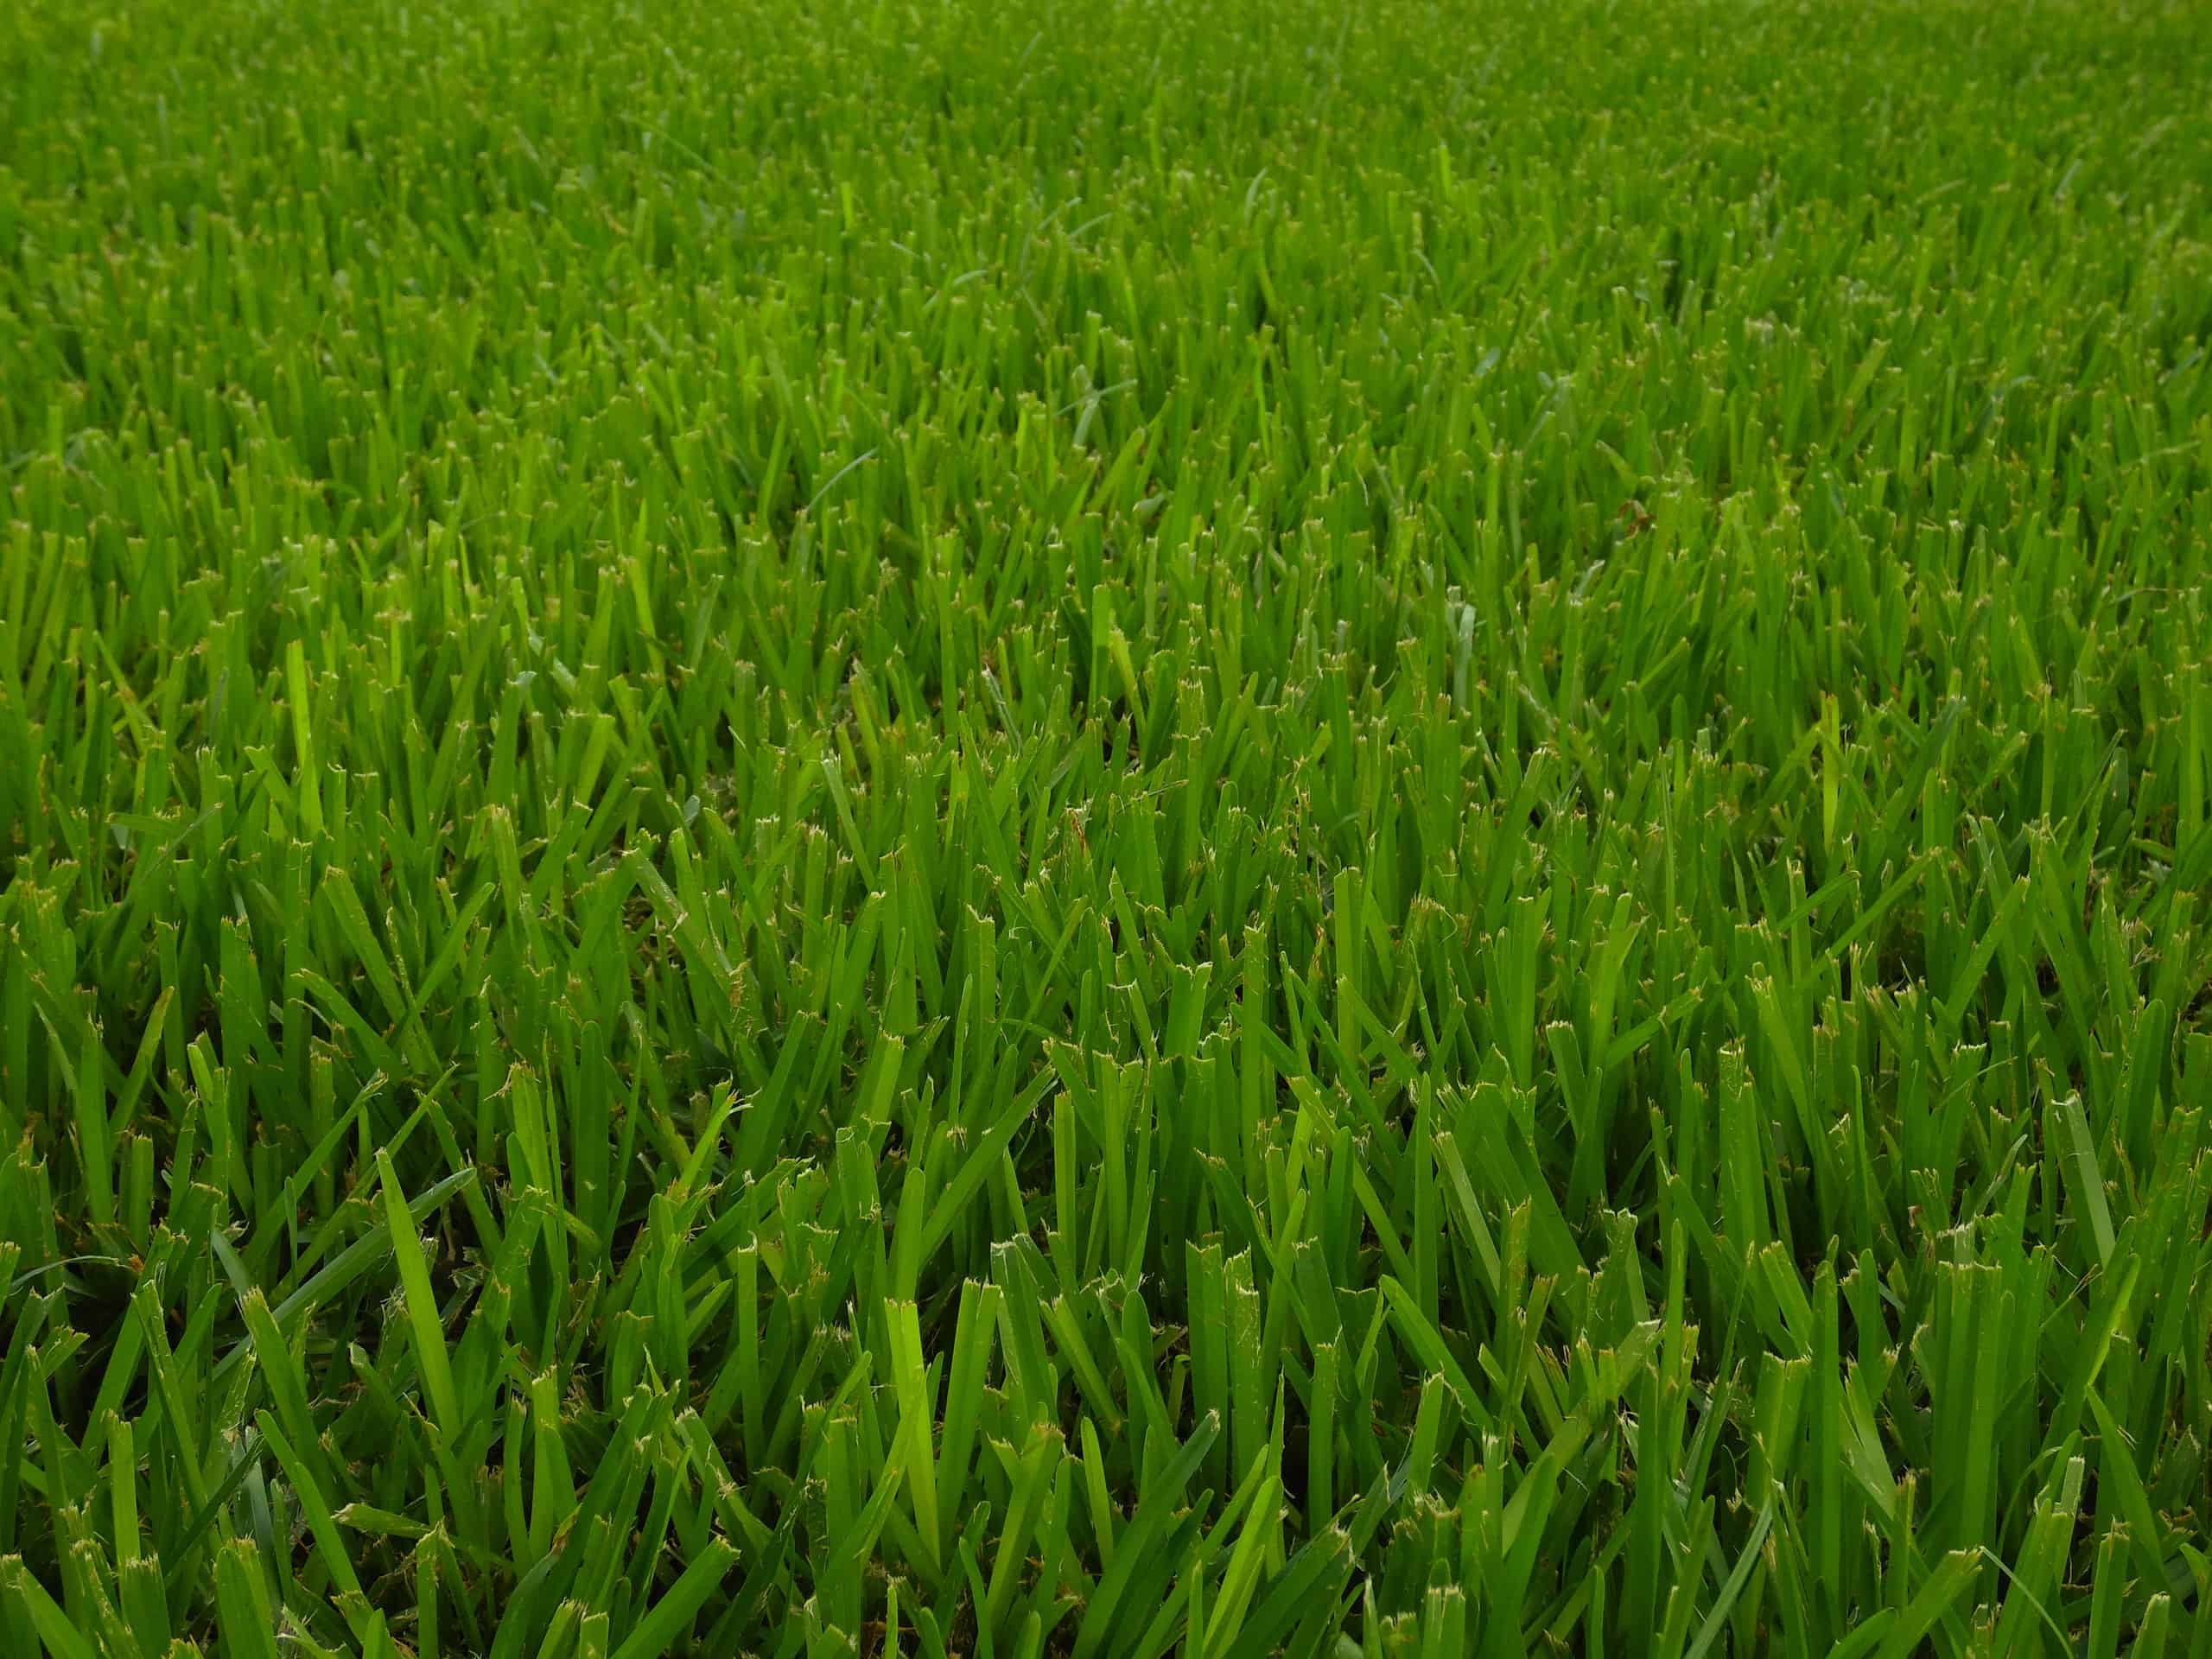 St. Augustine grass in a lawn